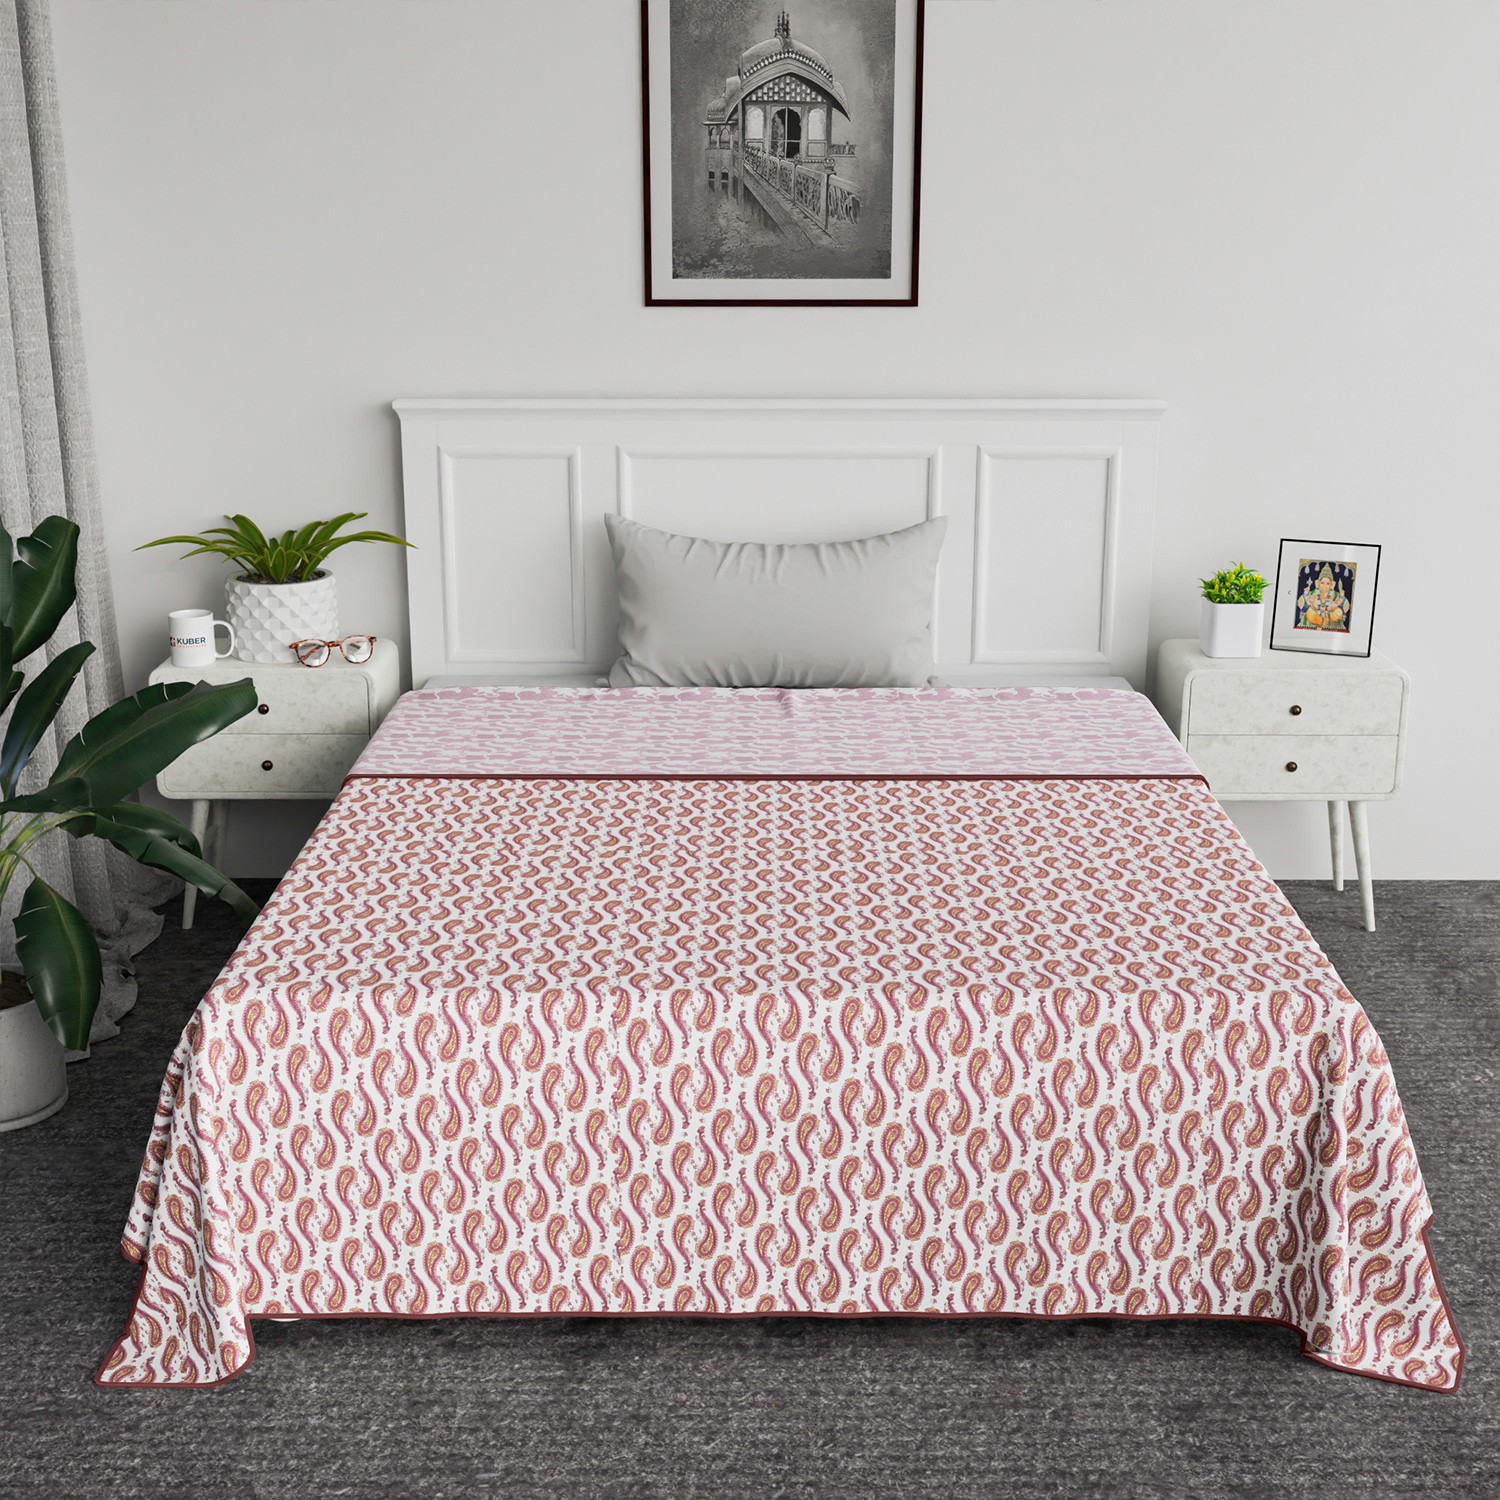 Kuber Industries Blanket | Cotton Single Bed Dohar | Blanket For Home | Reversible AC Blanket For Travelling | Blanket For Summer | Blanket For Winters | Carry Print | Pink